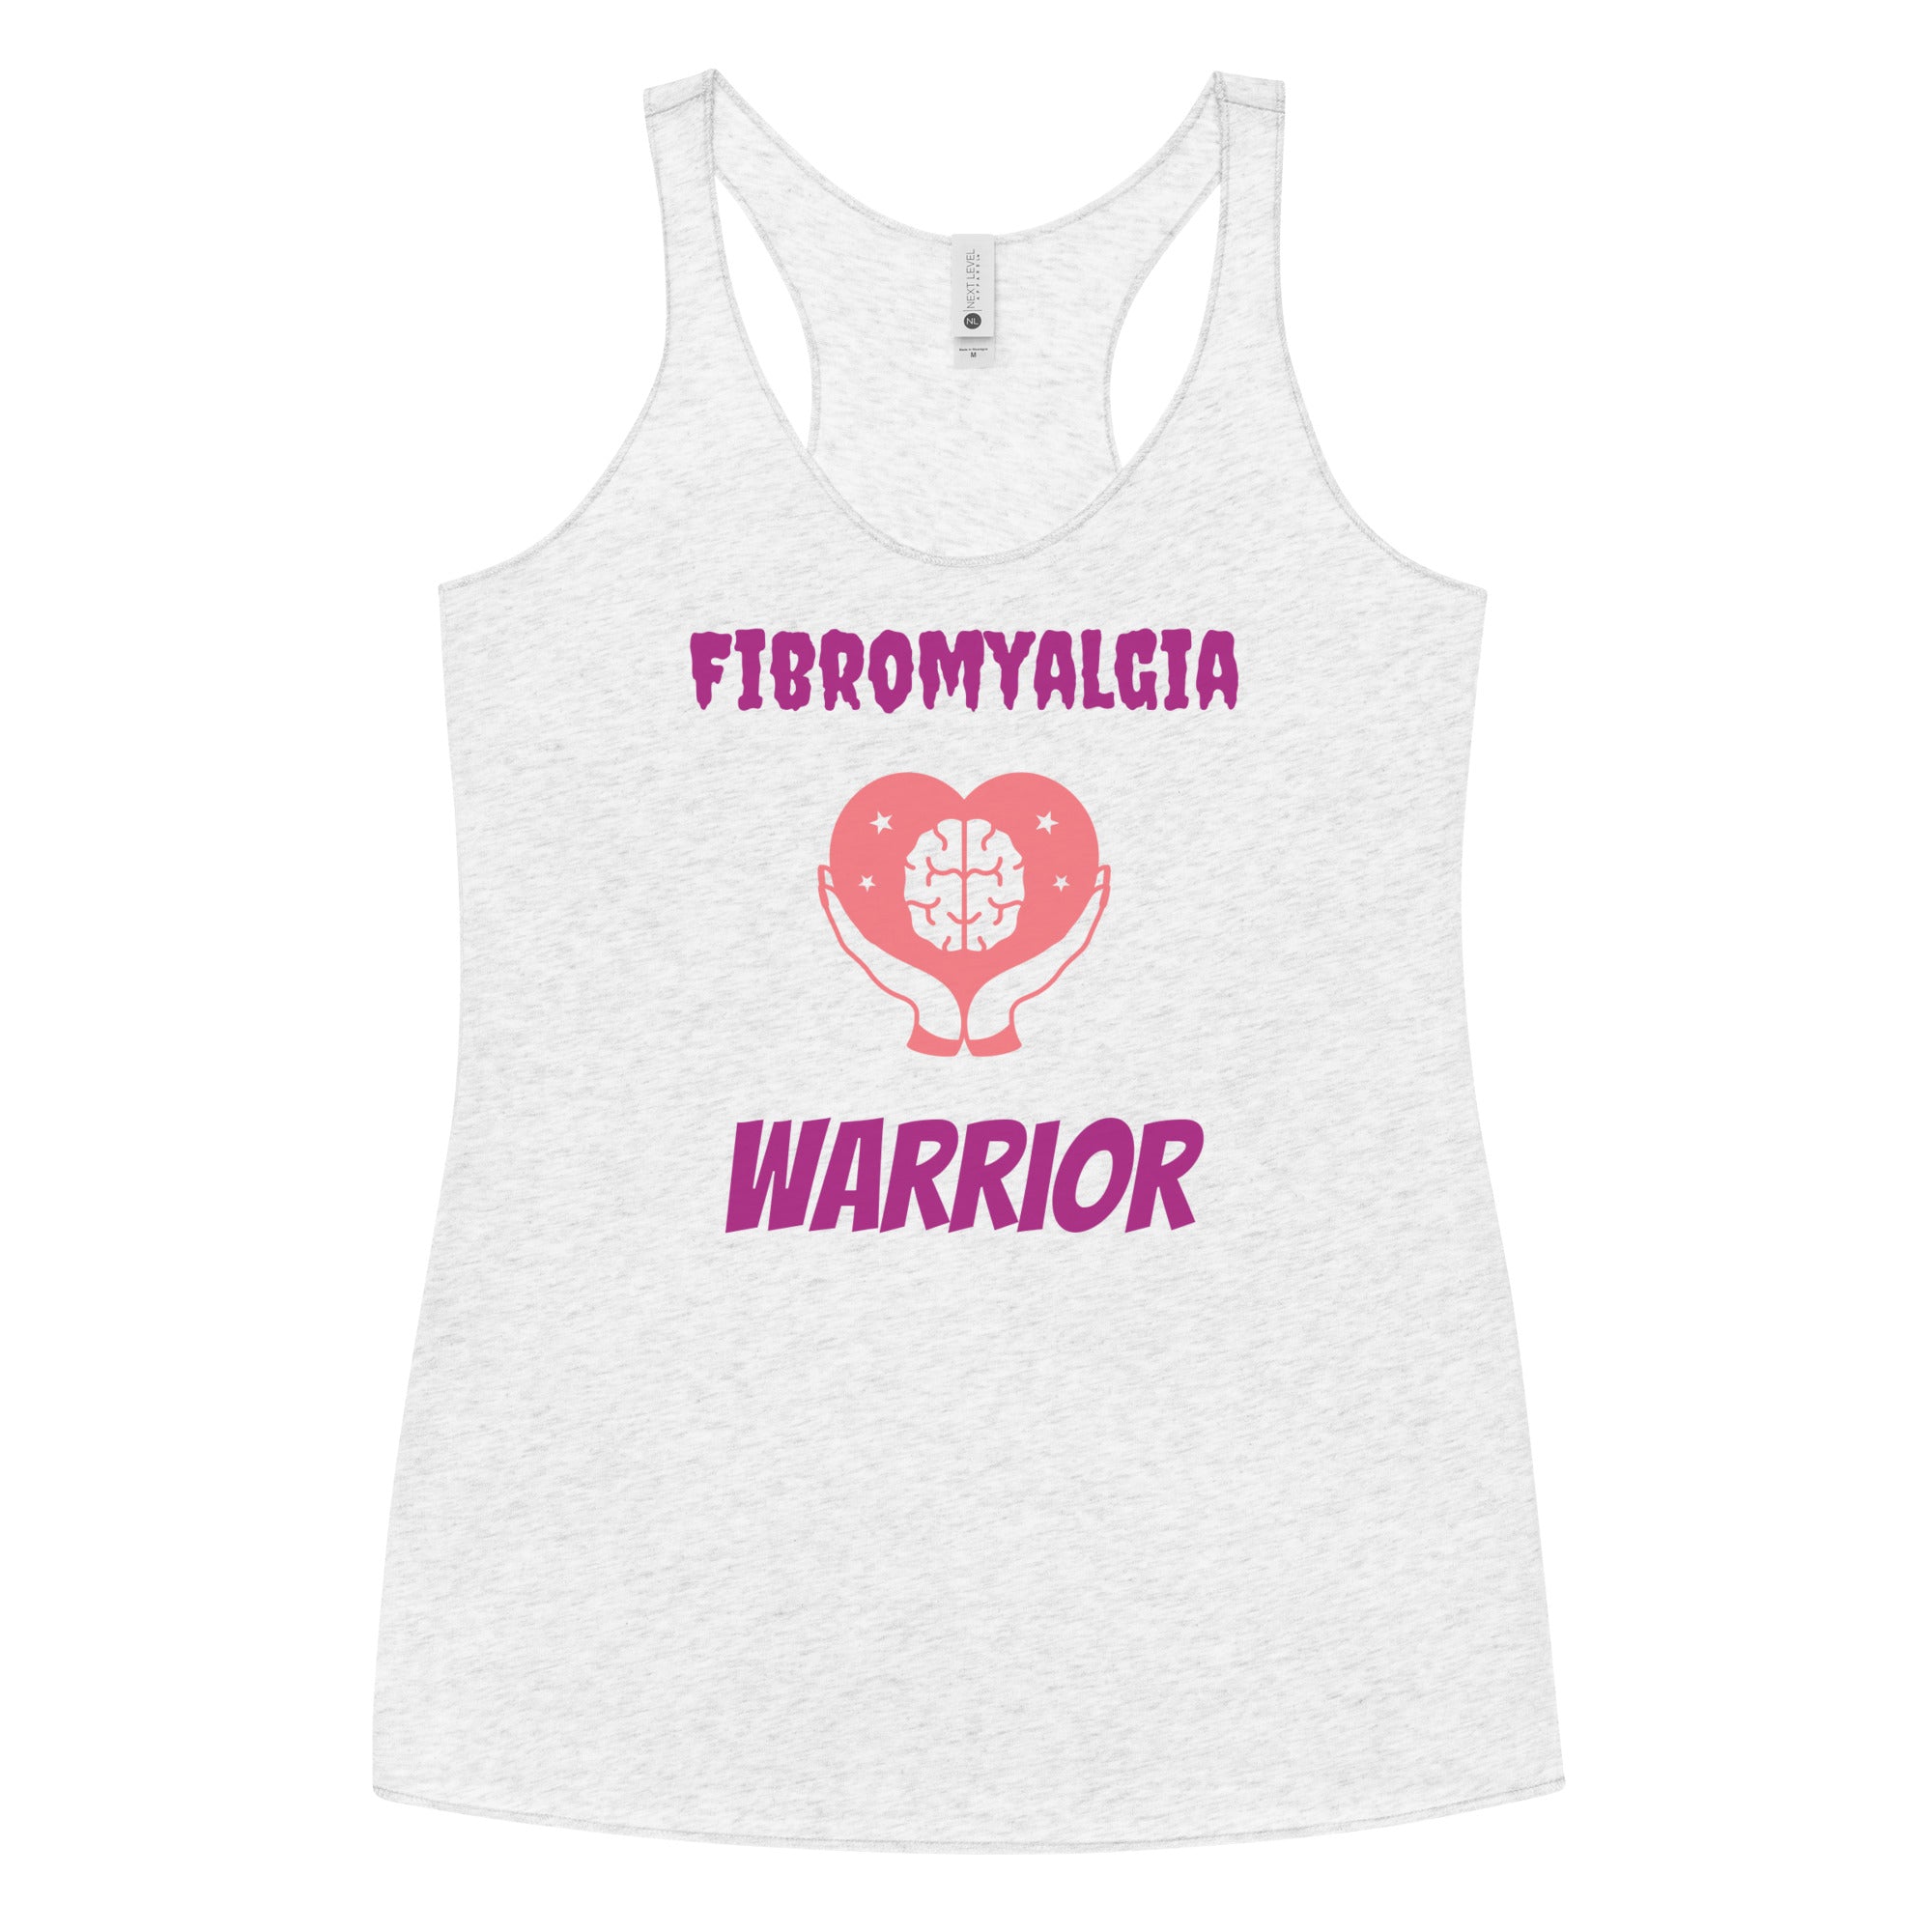 Fibromyalgia Warrior Women's Racerback Tank